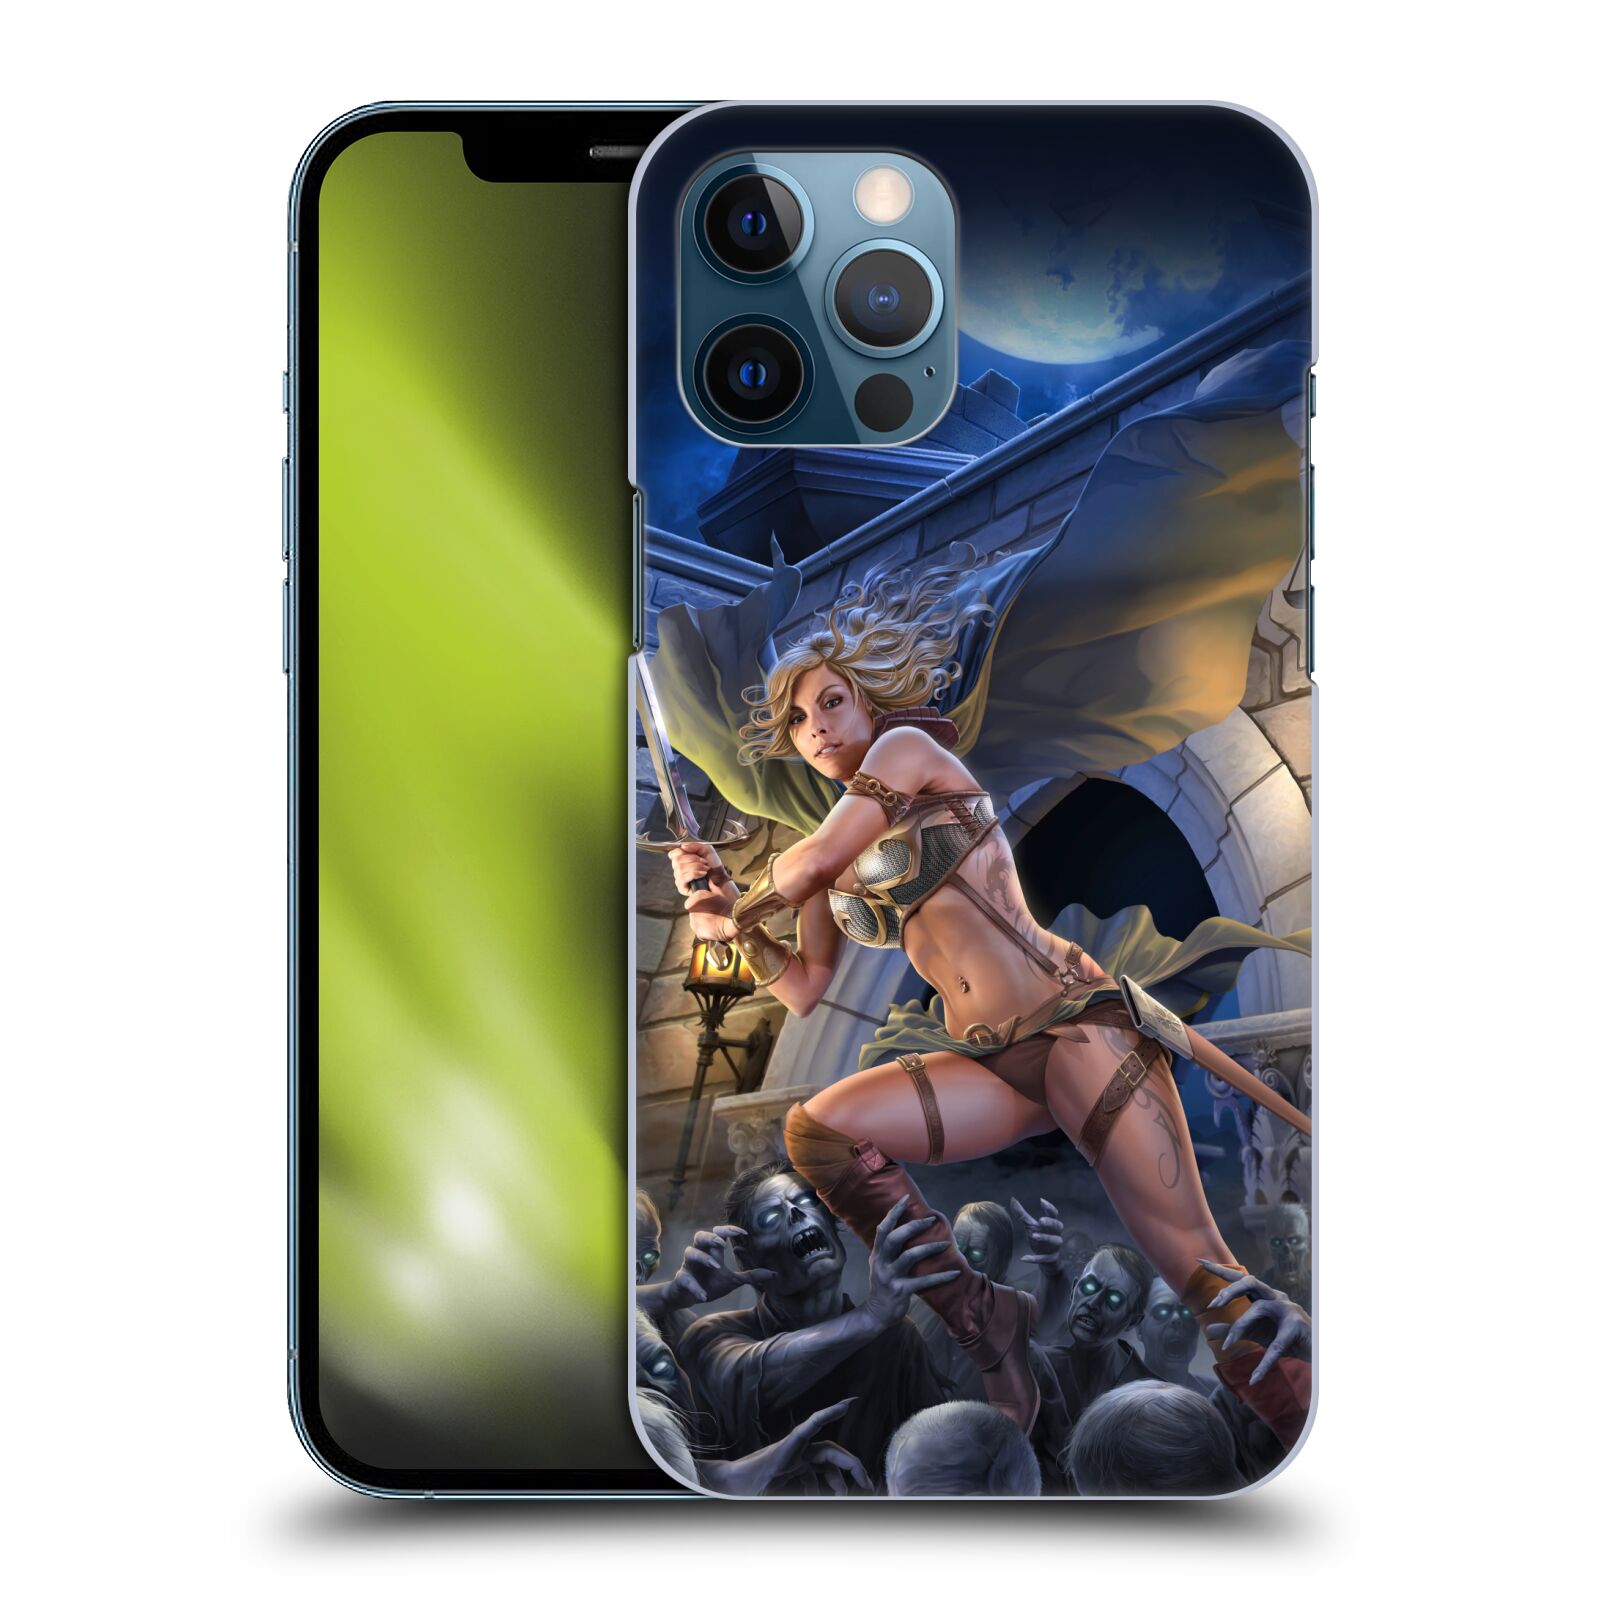 Pouzdro na mobil Apple Iphone 12 PRO MAX - HEAD CASE - Fantasy kresby Tom Wood - Princezna bojovnice a zombies